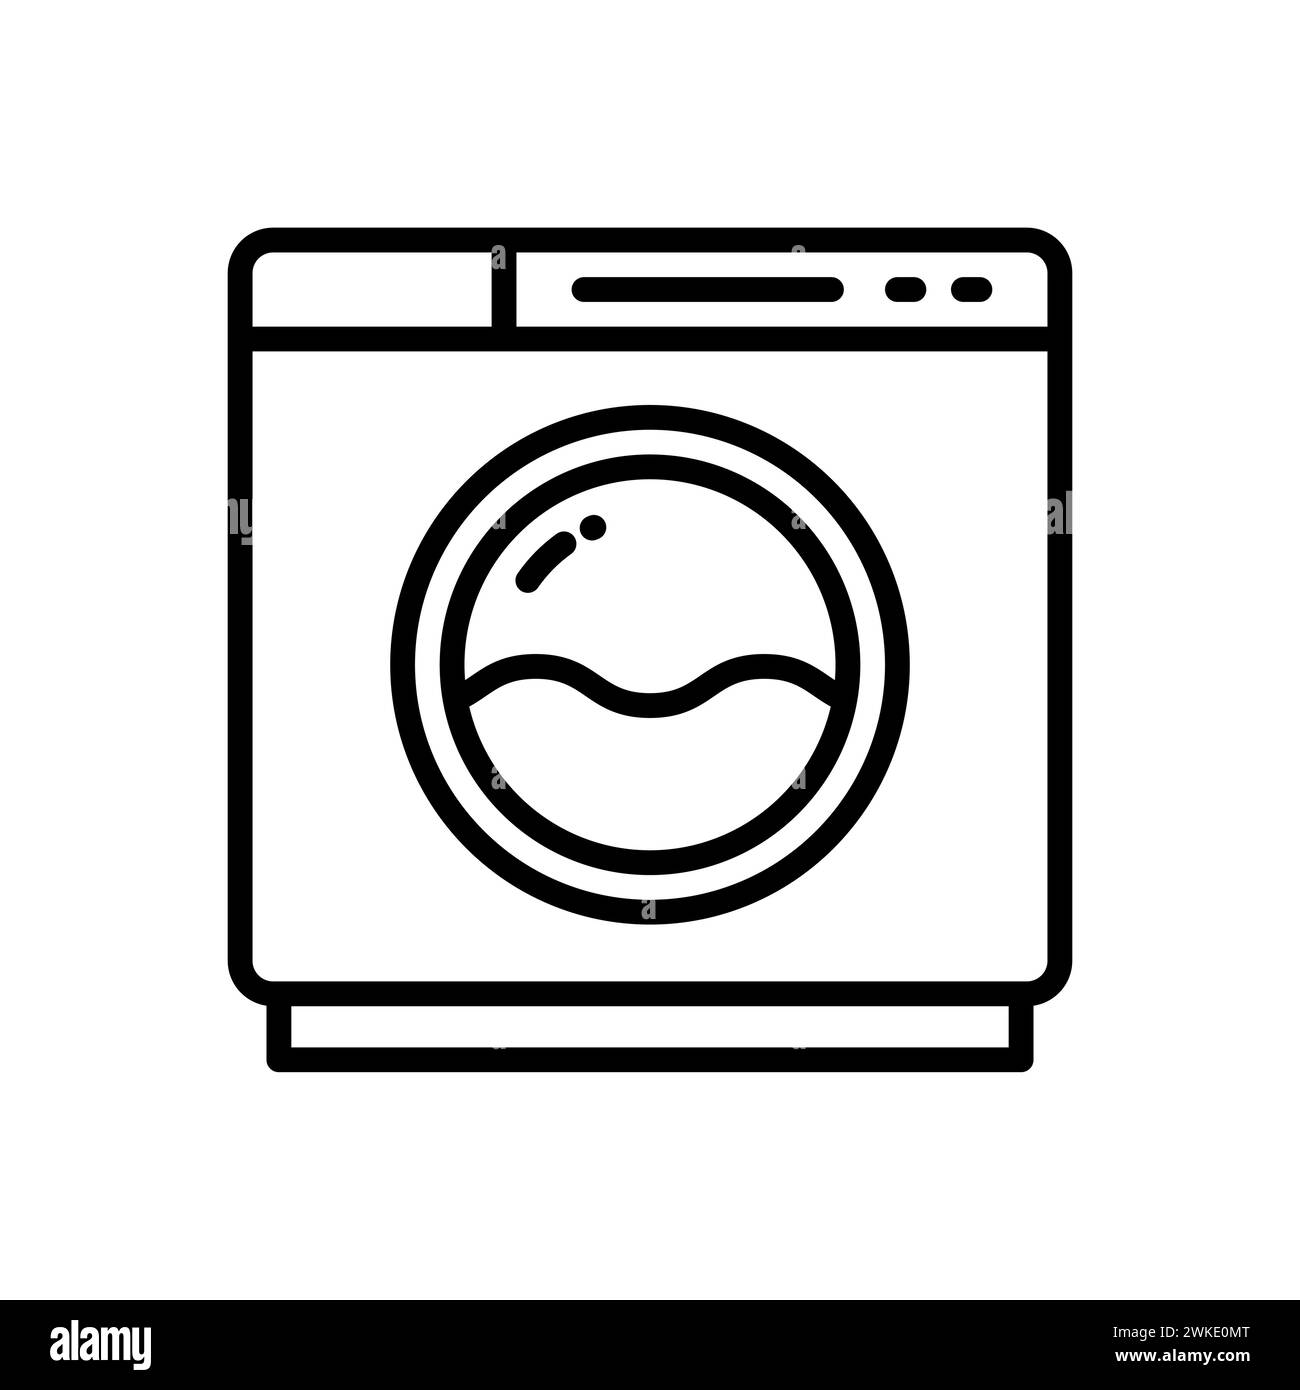 Art illustration symbol icon furniture logo household design sketch hand draw of washing machine Stock Vector